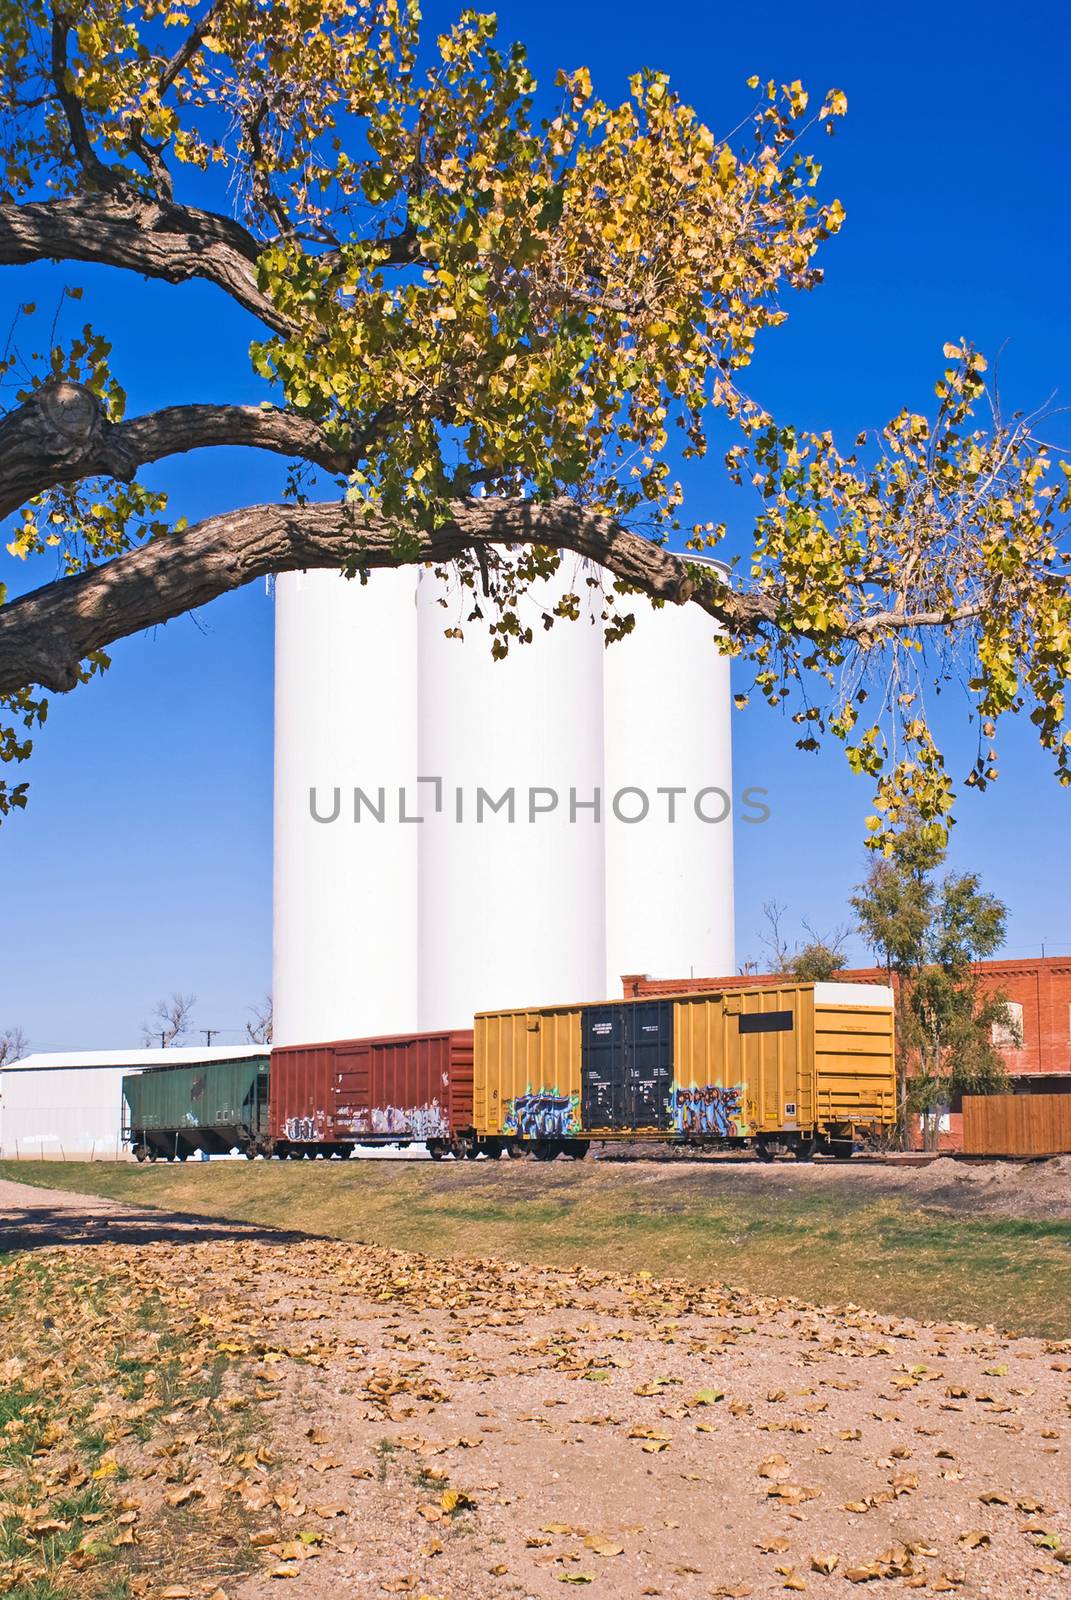 Railcars parked near grain silos in central Colorado, USA.